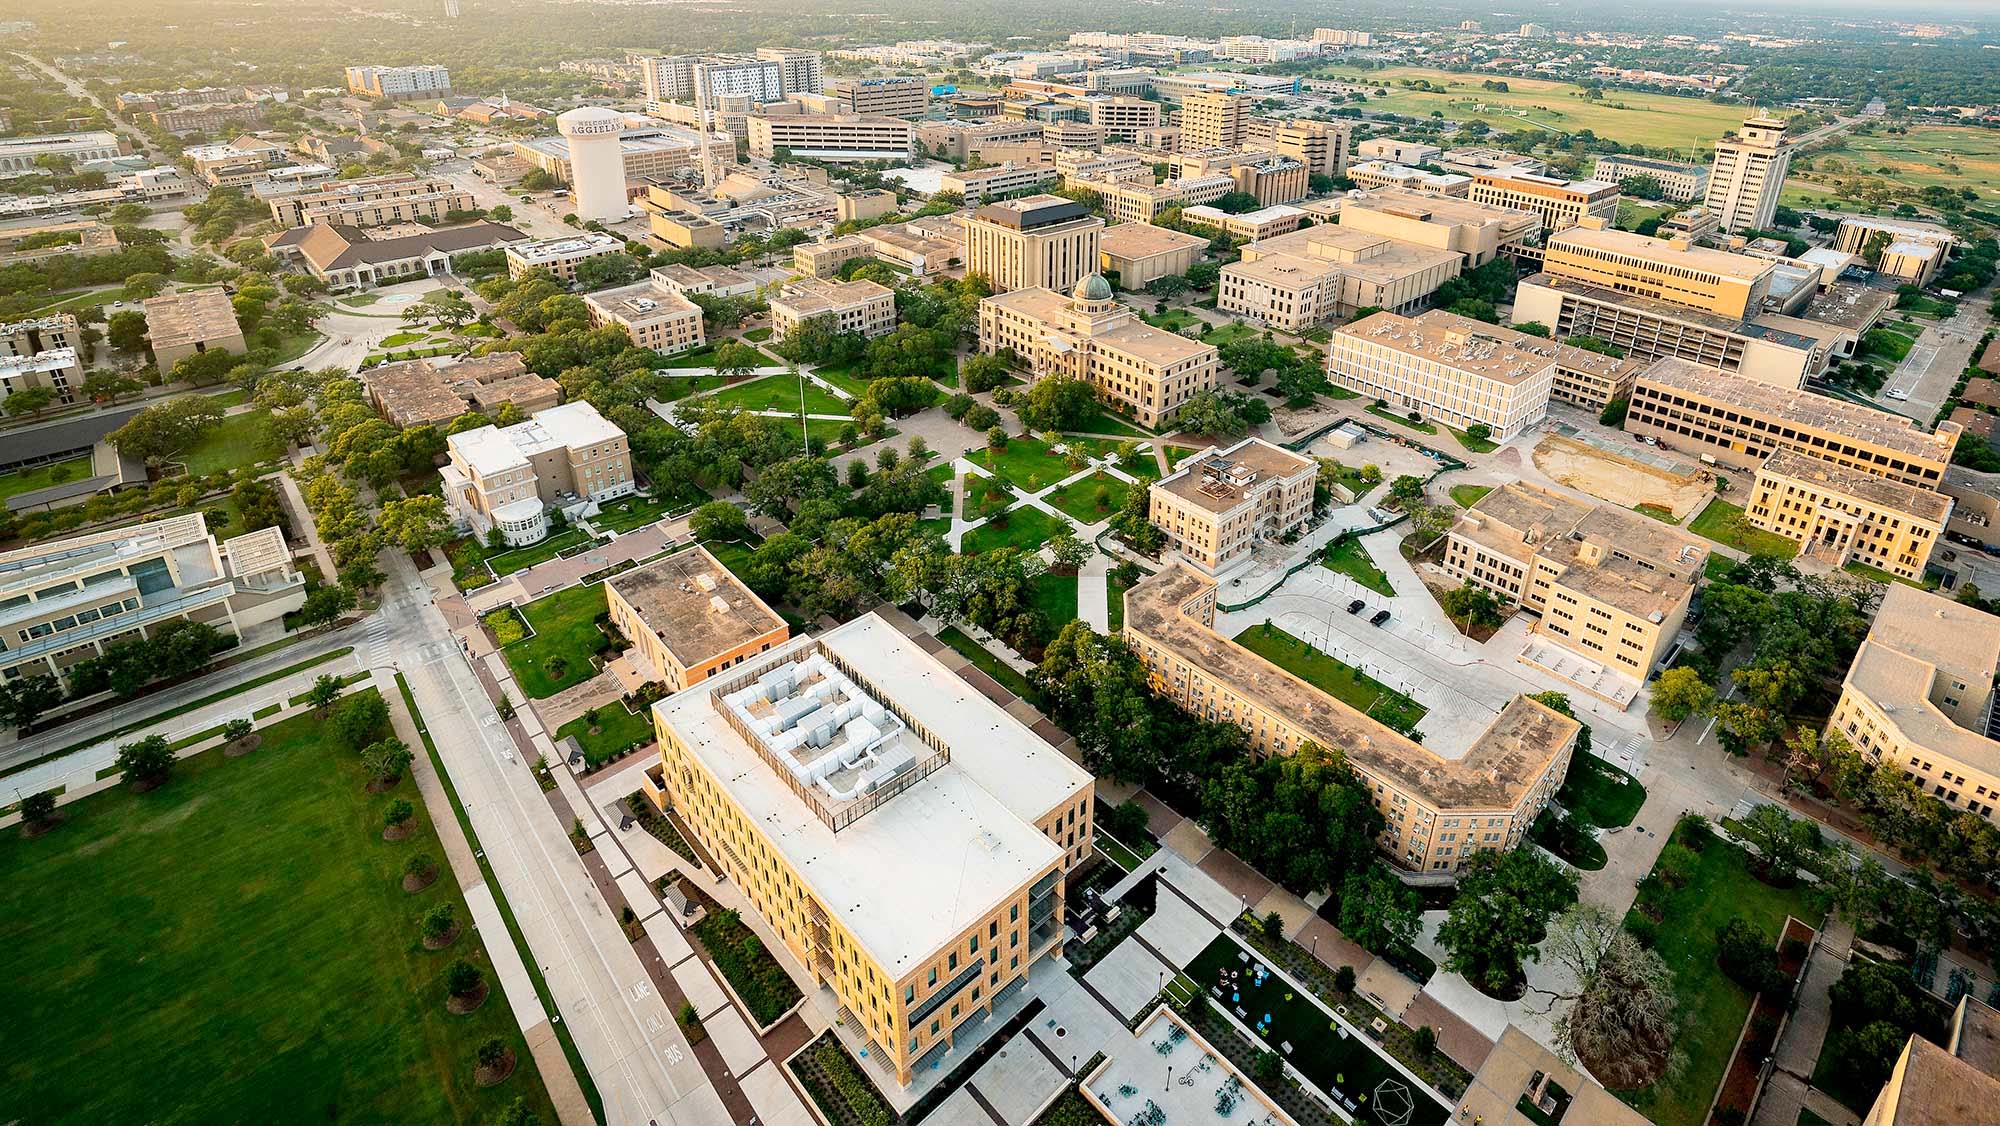 Aerial of Academic Building of University Campus